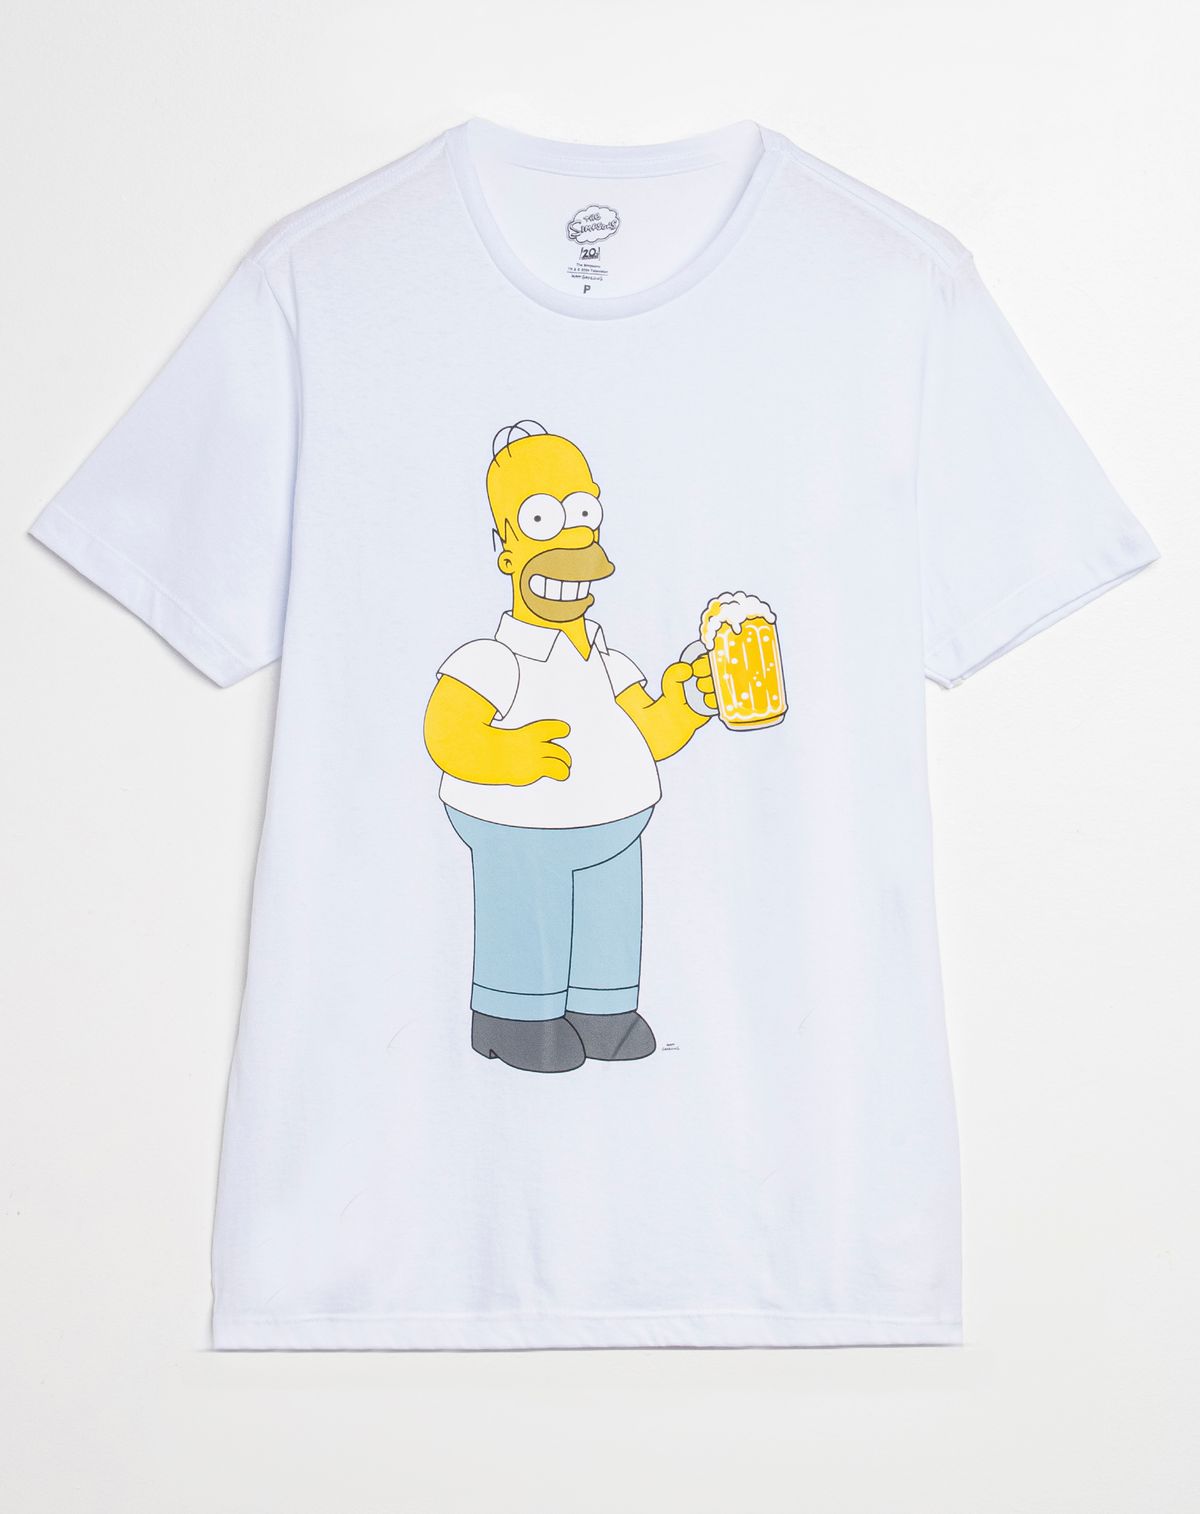 623495001-camiseta-manga-curta-masculina-homer-simpson-branco-p-16b